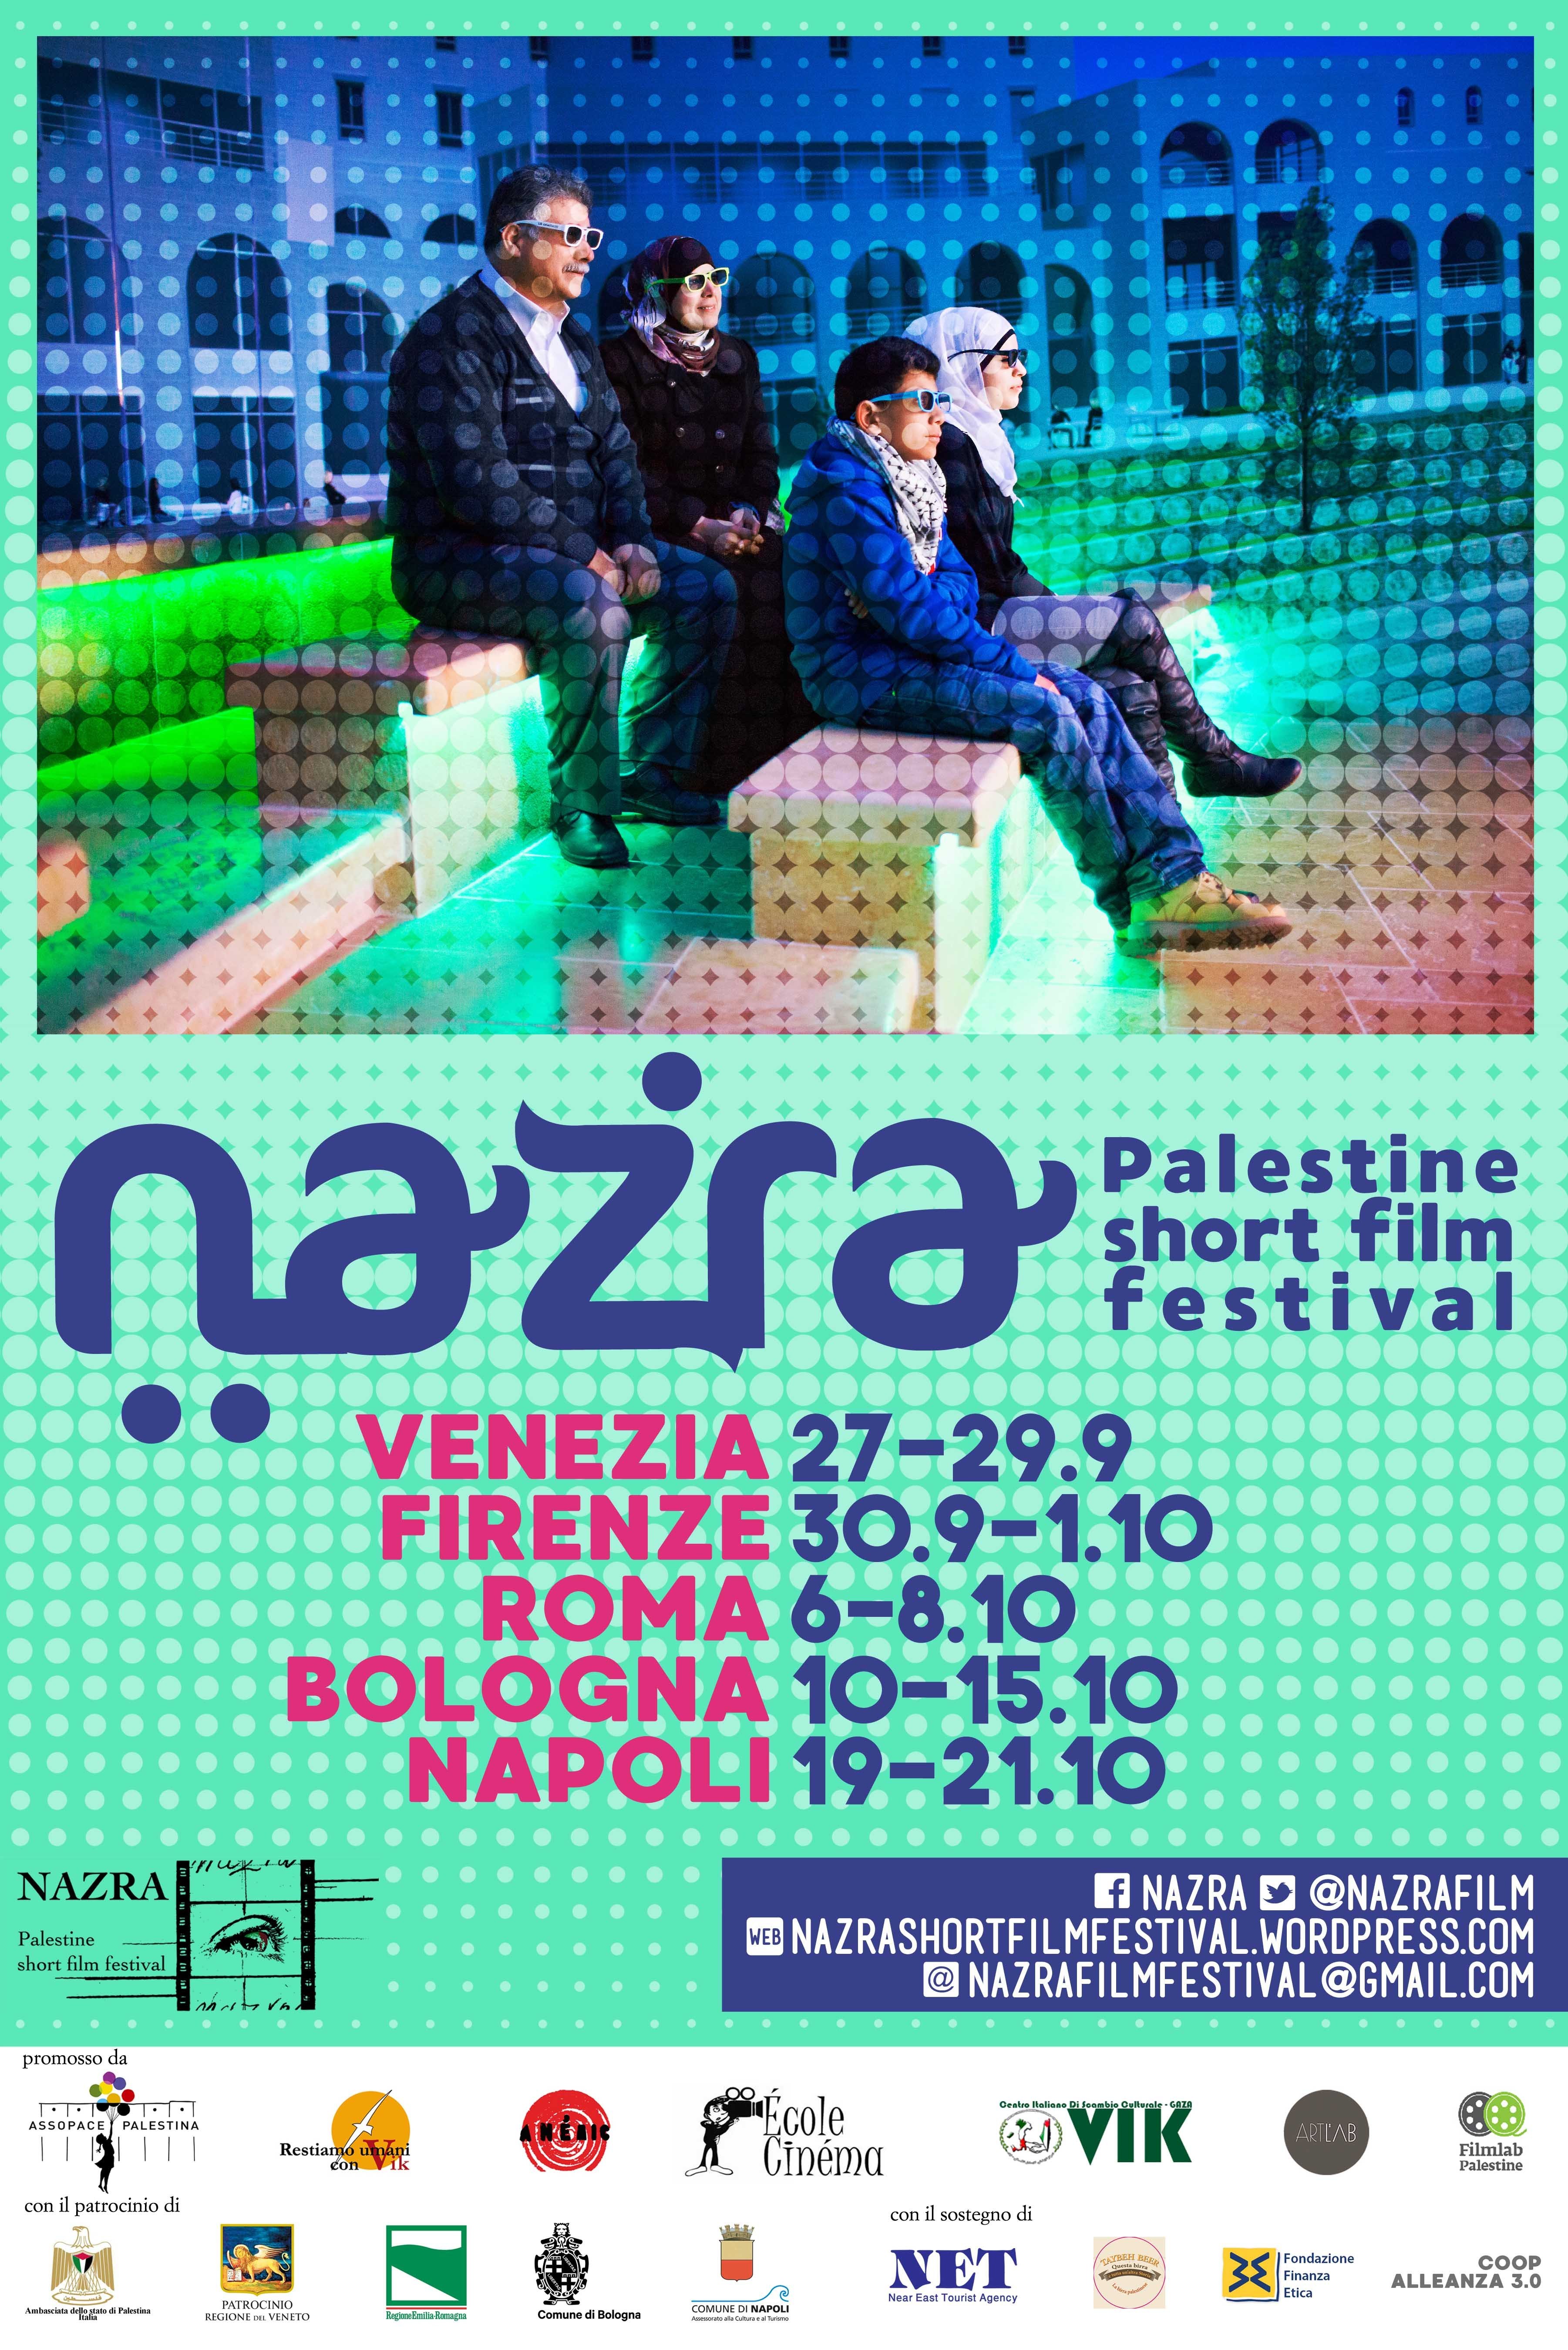 Nazra Palestine short film festival alla grande!